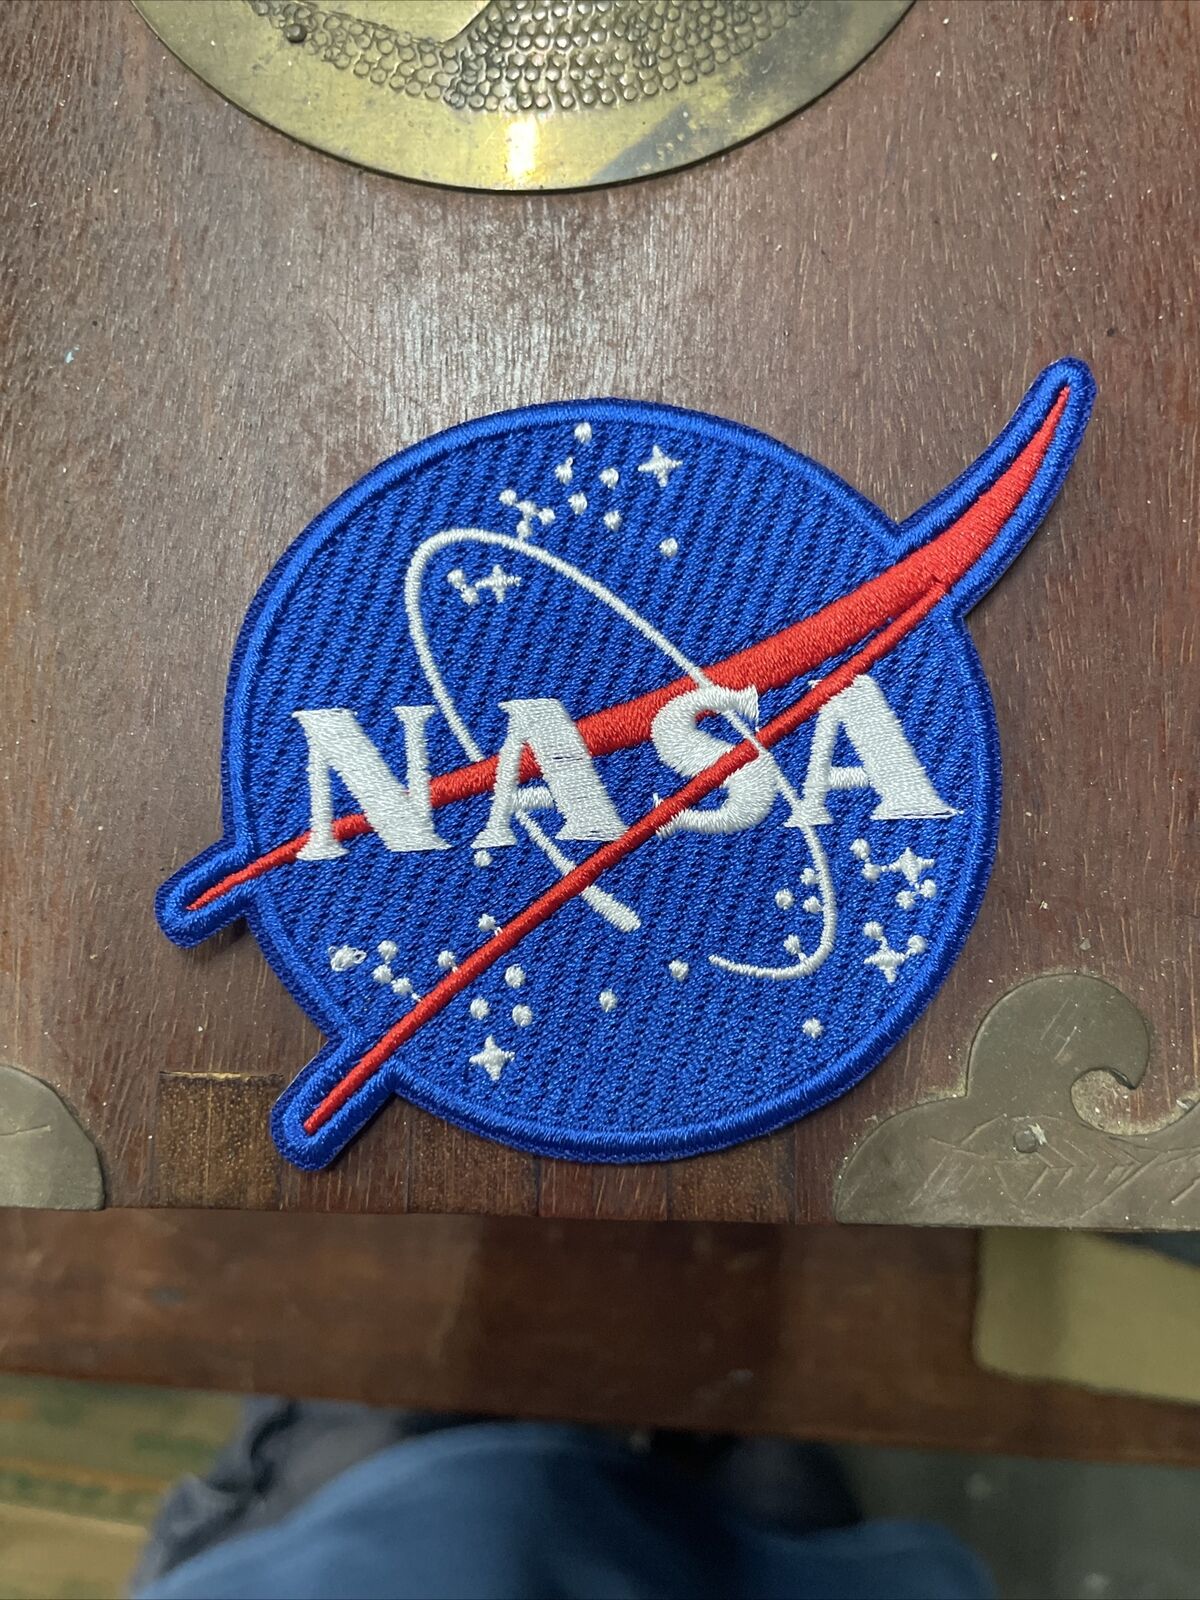 NASA  Official Emblem “Meatball” Patch